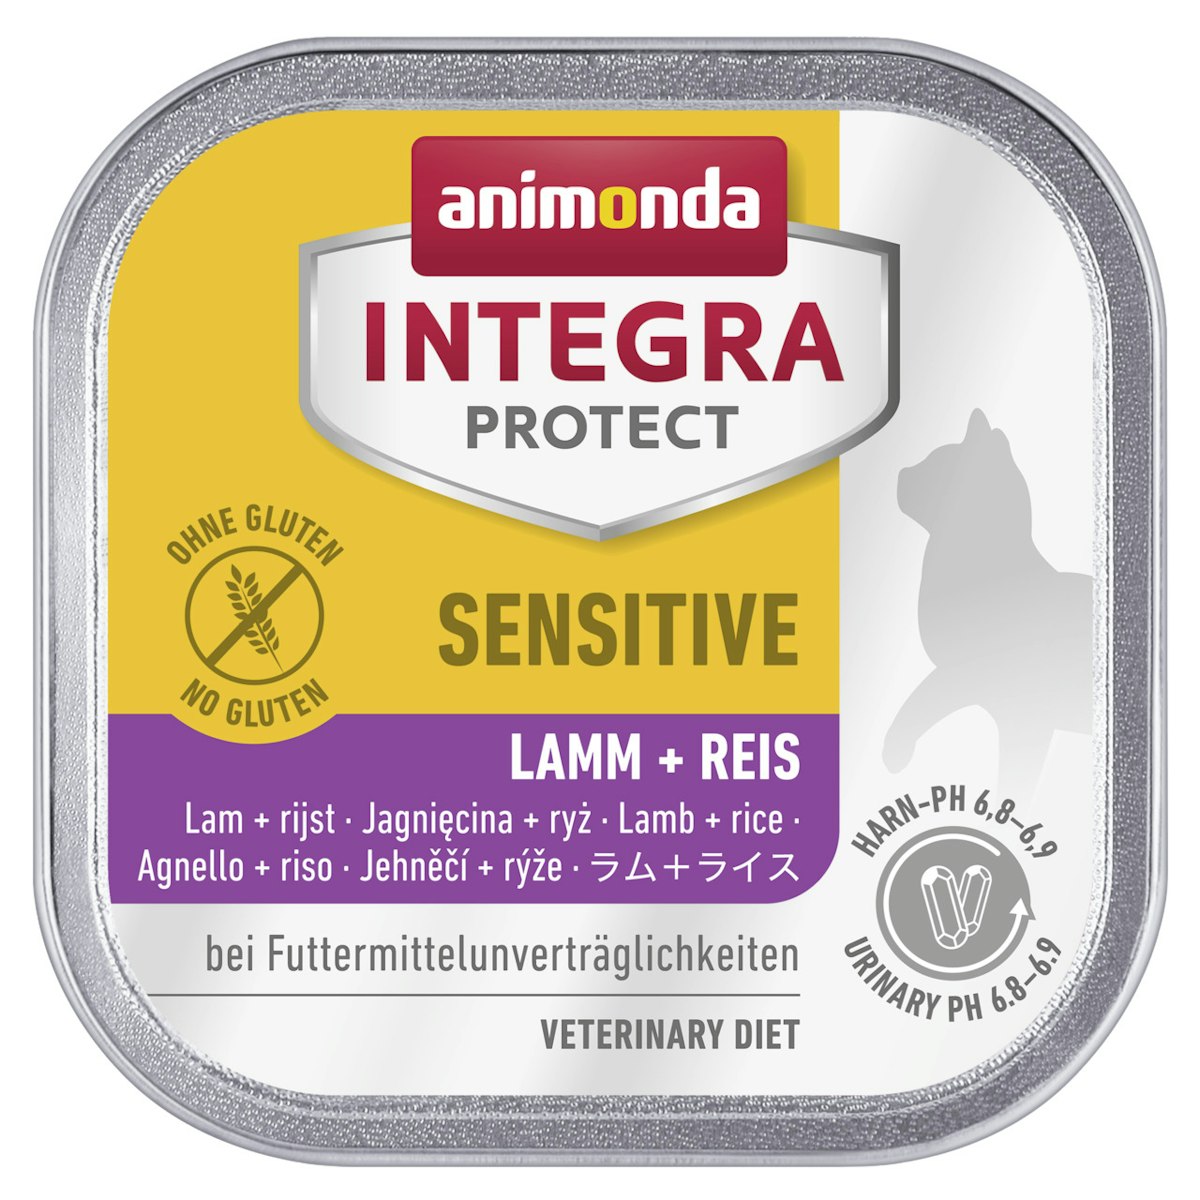 animonda Integra Protect Sensitive 100g Schale Katzennassfutter Sparpaket 32 x 100 Gramm Huhn pur